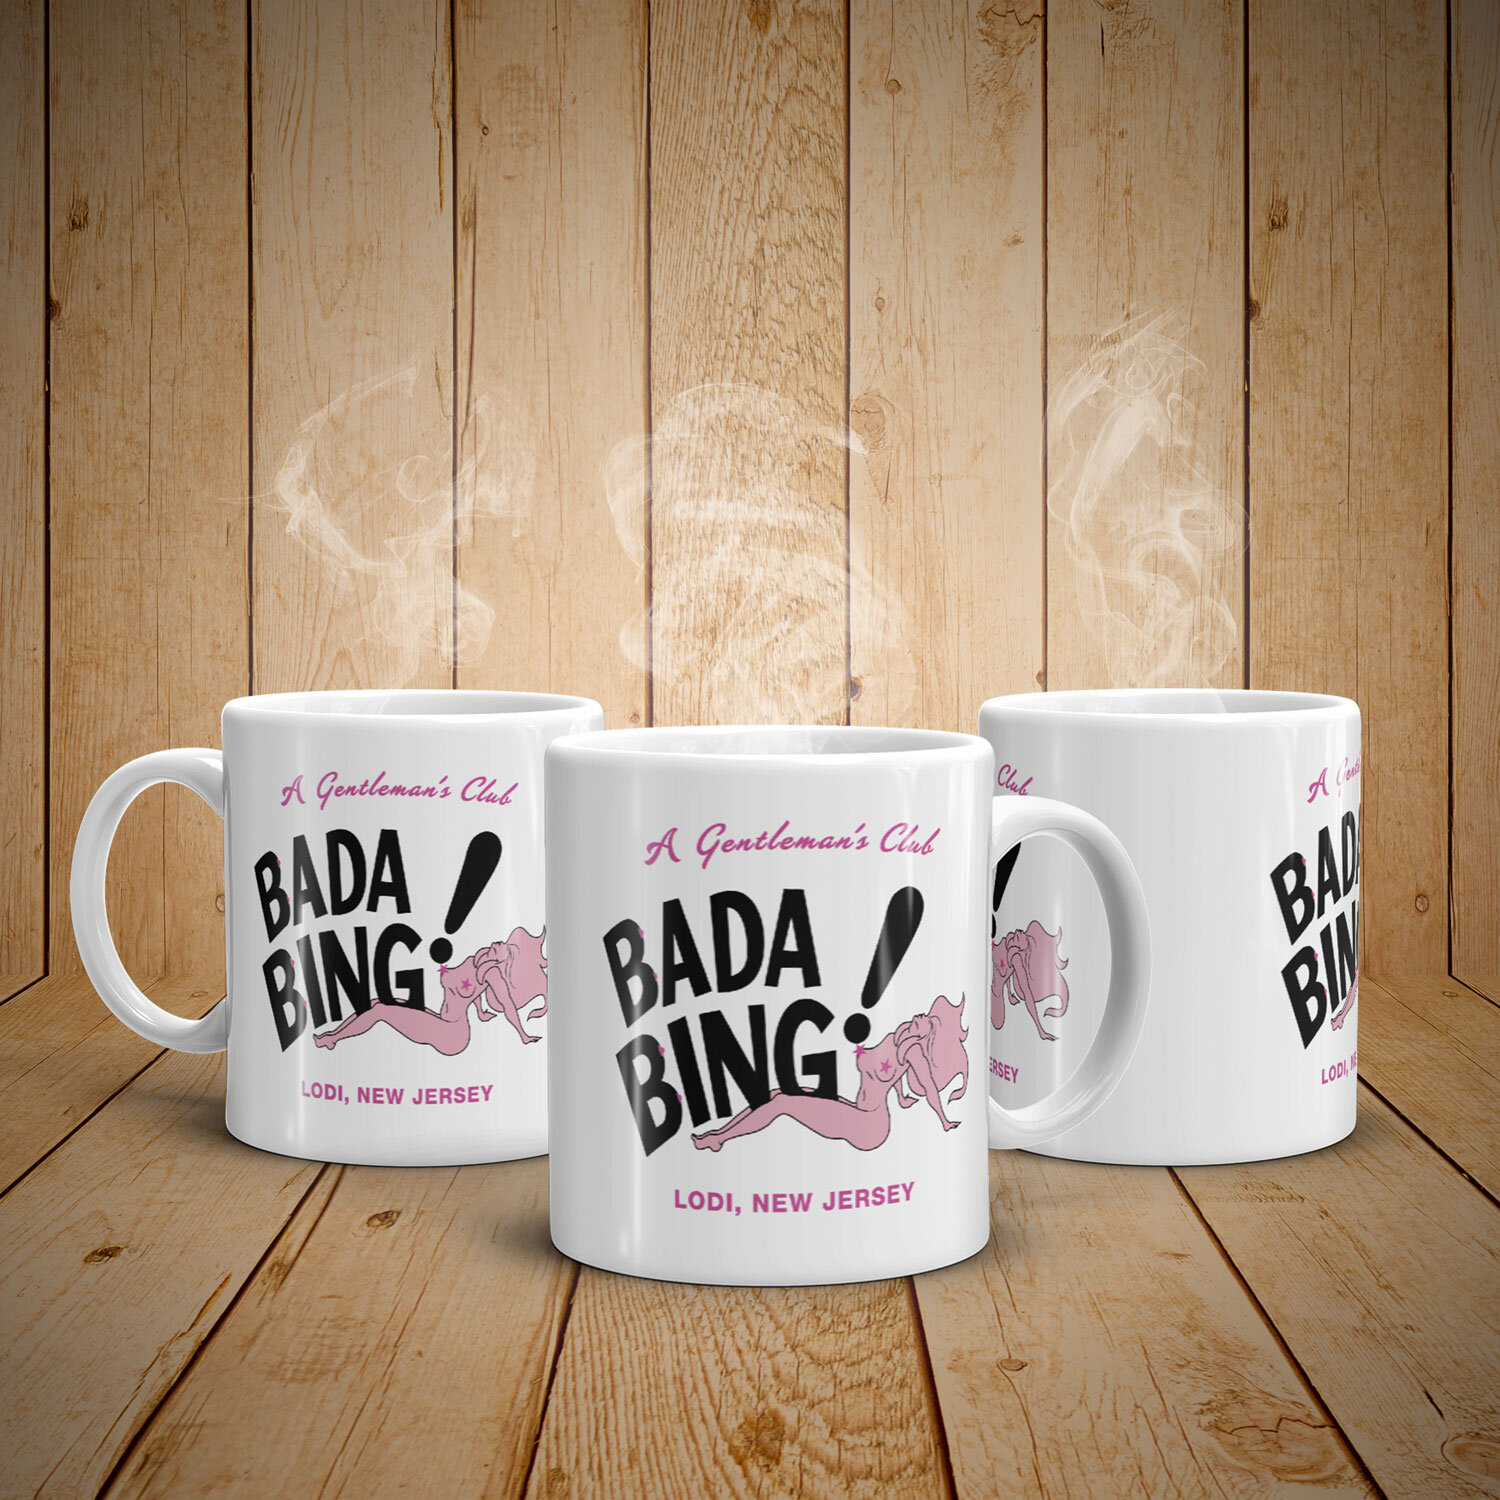 Bada Bing Sopranos Cup Black Coffee Mug 11 15 Oz